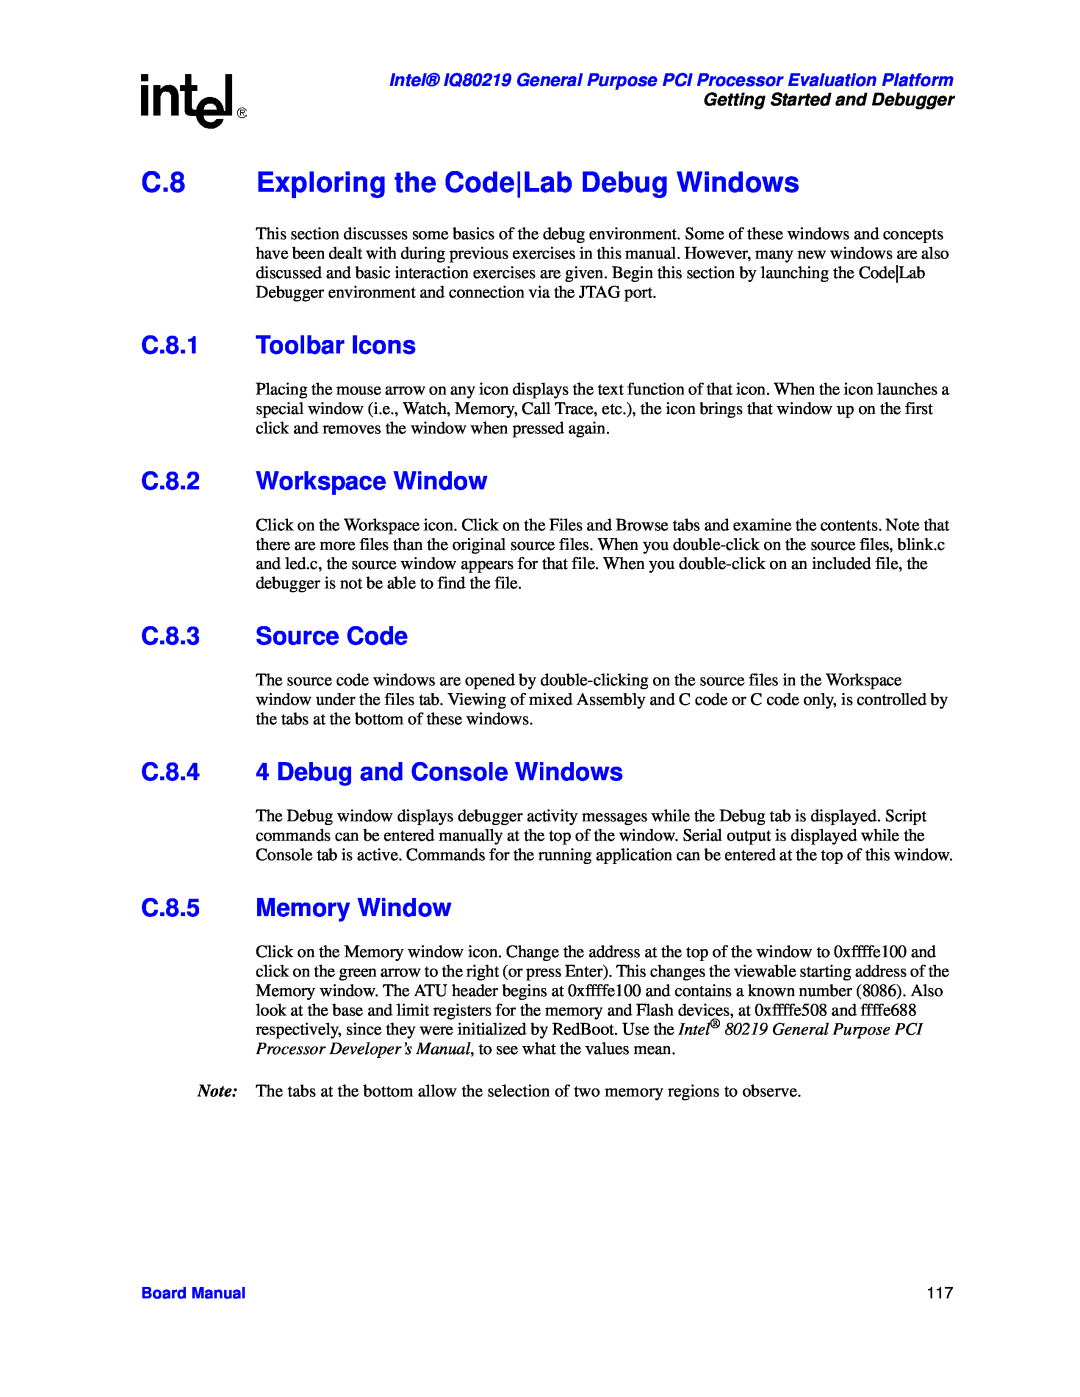 Intel IQ80219 C.8 Exploring the CodeLab Debug Windows, C.8.1 Toolbar Icons, C.8.2 Workspace Window, C.8.3 Source Code 